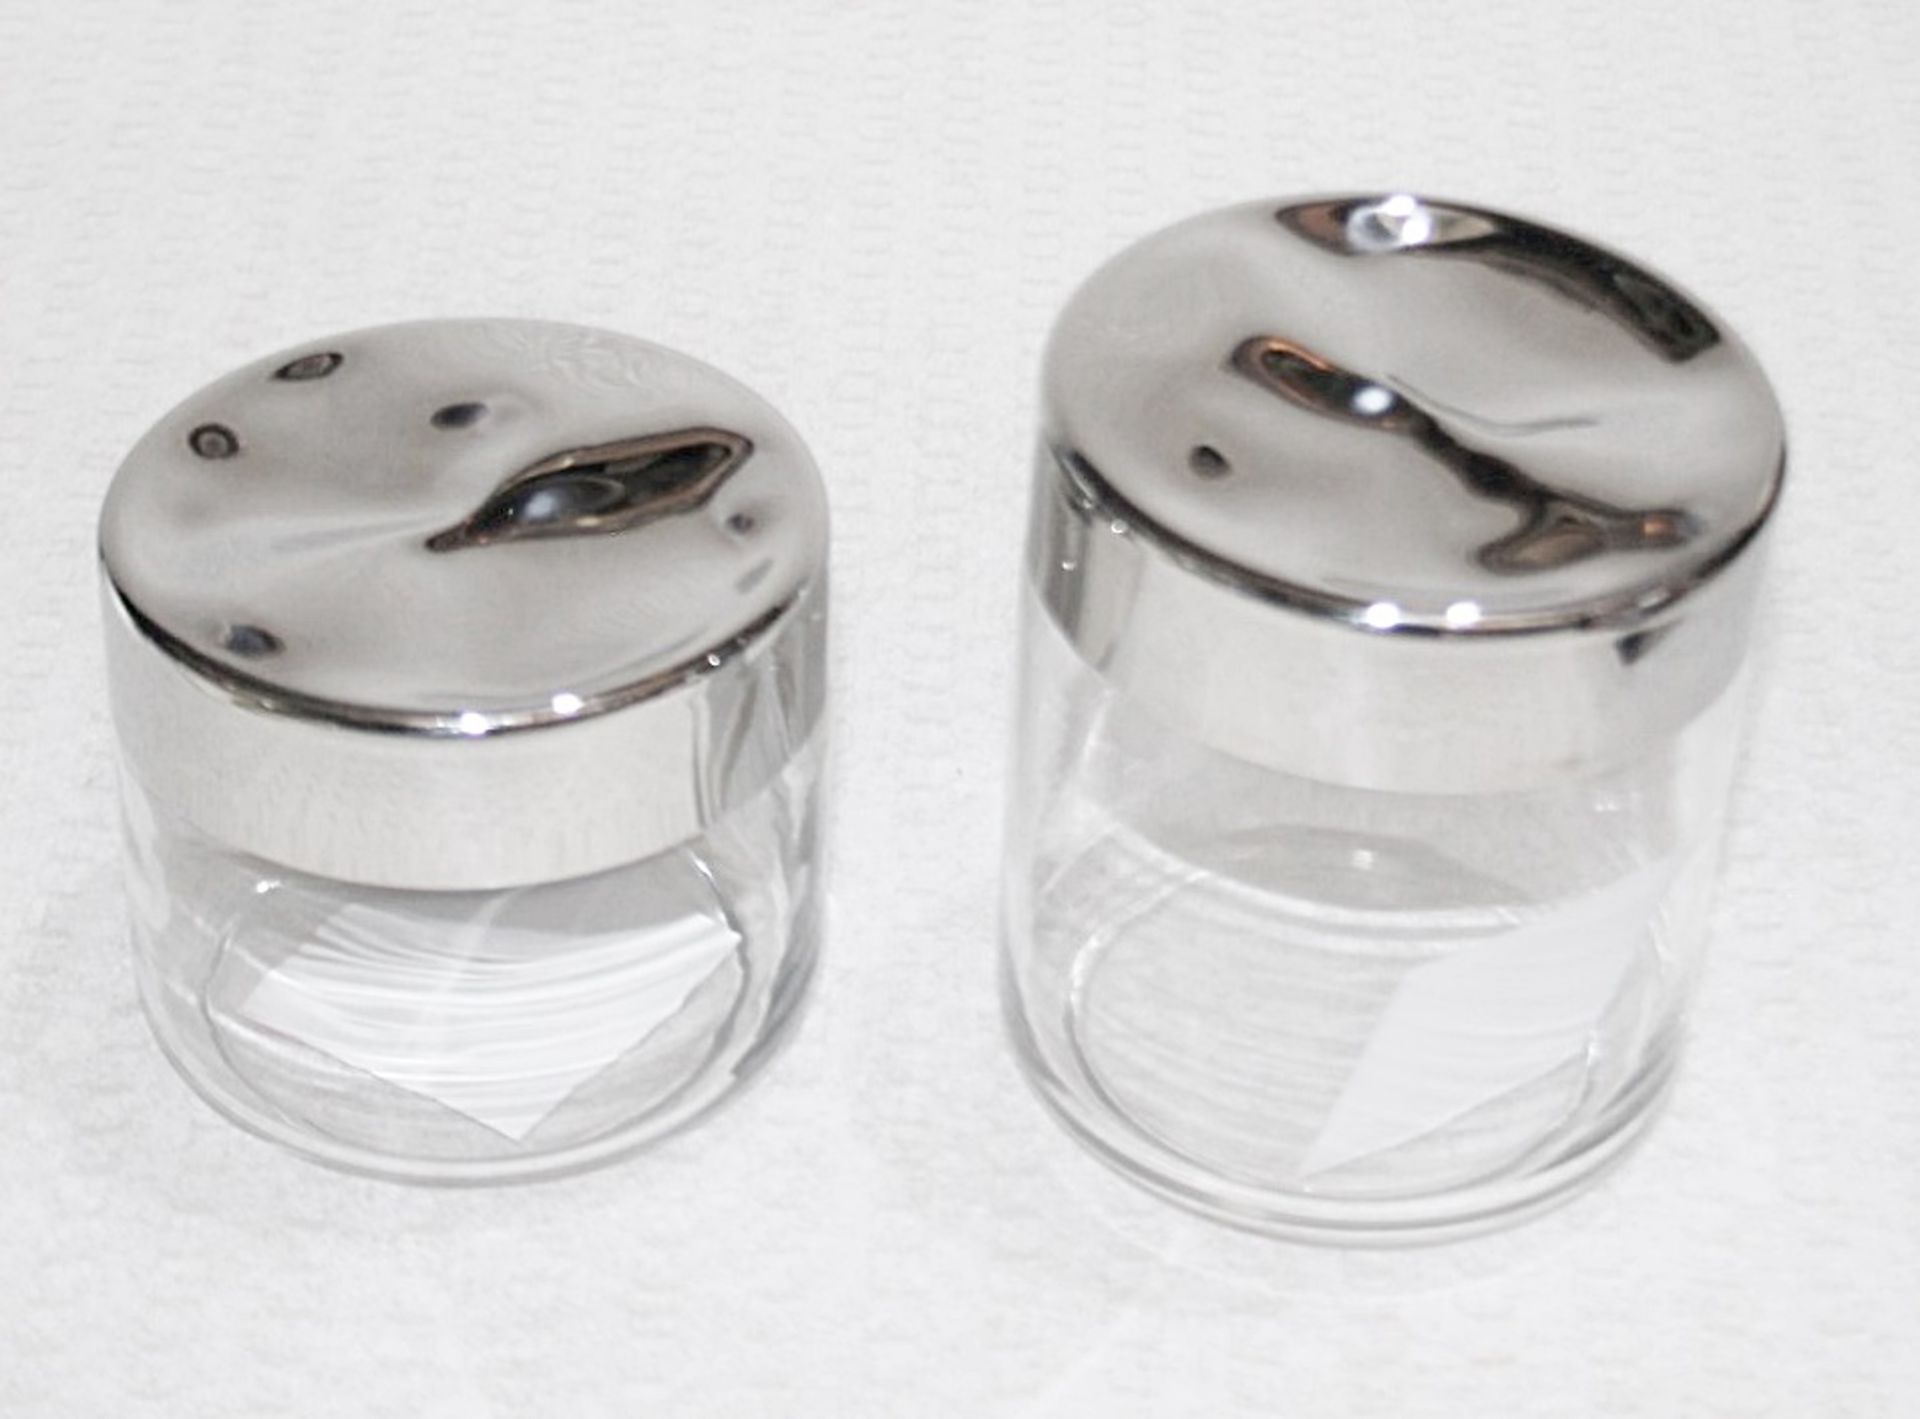 2 x ALESSI 'Julieta' Storage Jars - Heights Vary - Original Price £78.00 - Image 3 of 6